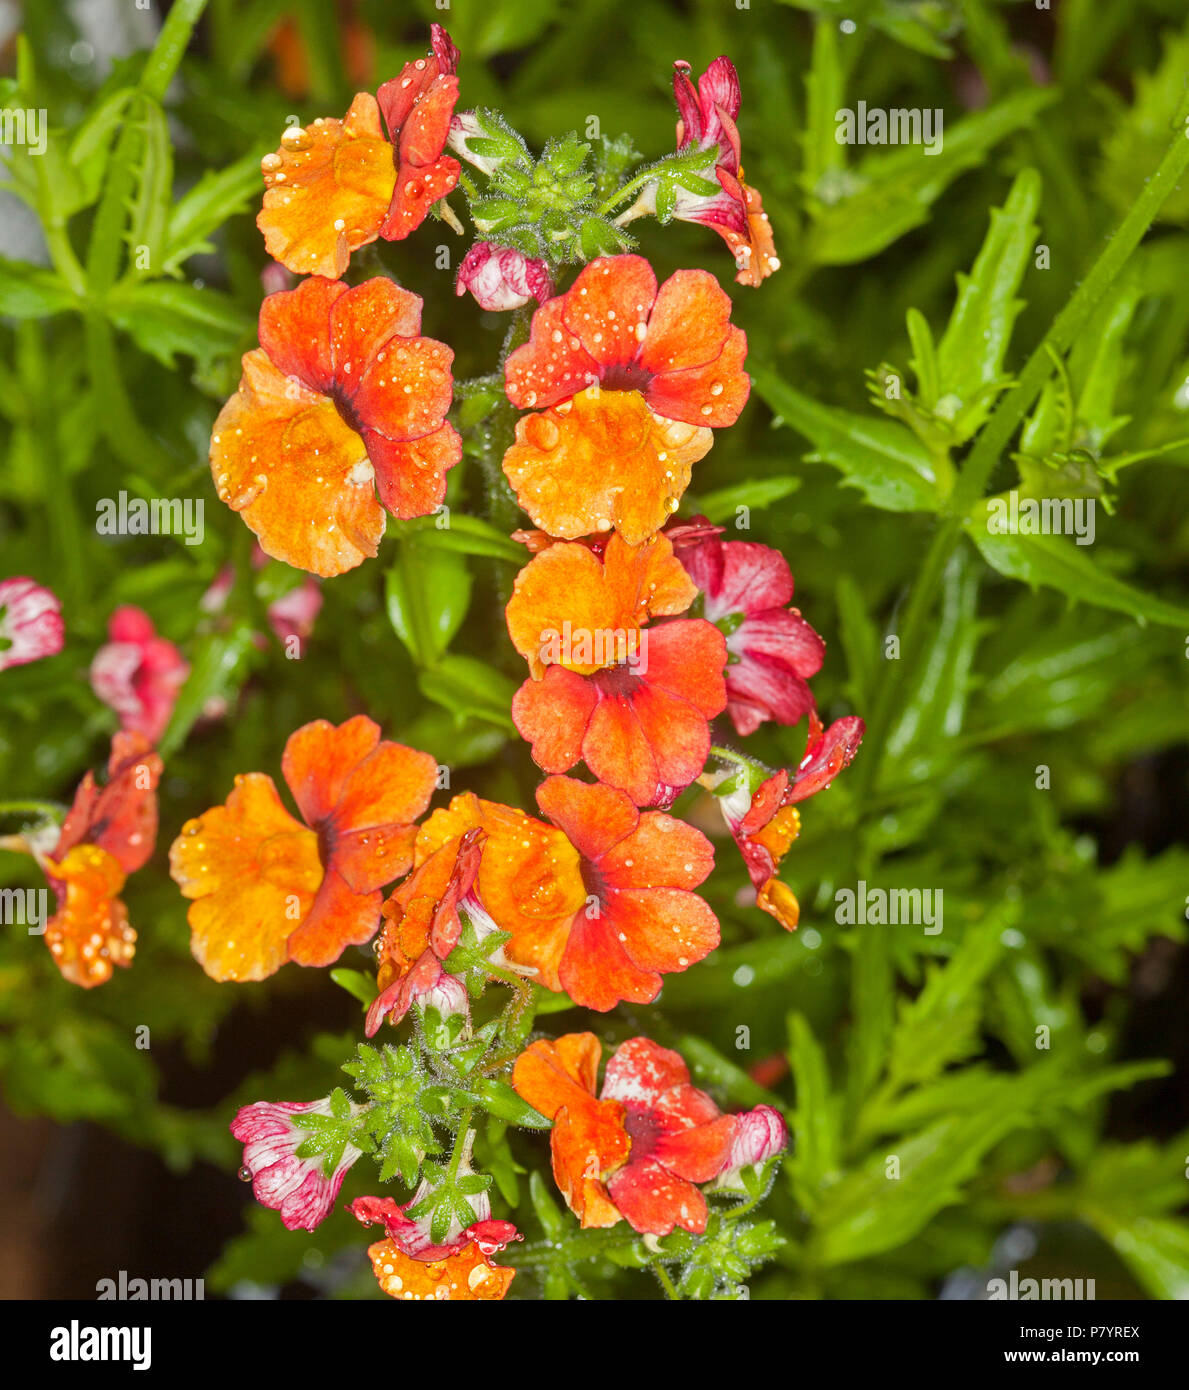 Cluster of vivid orange flowers and emerald green leaves of Nemesia caerulea Sunsatia hybrid with raindrops on petals Stock Photo